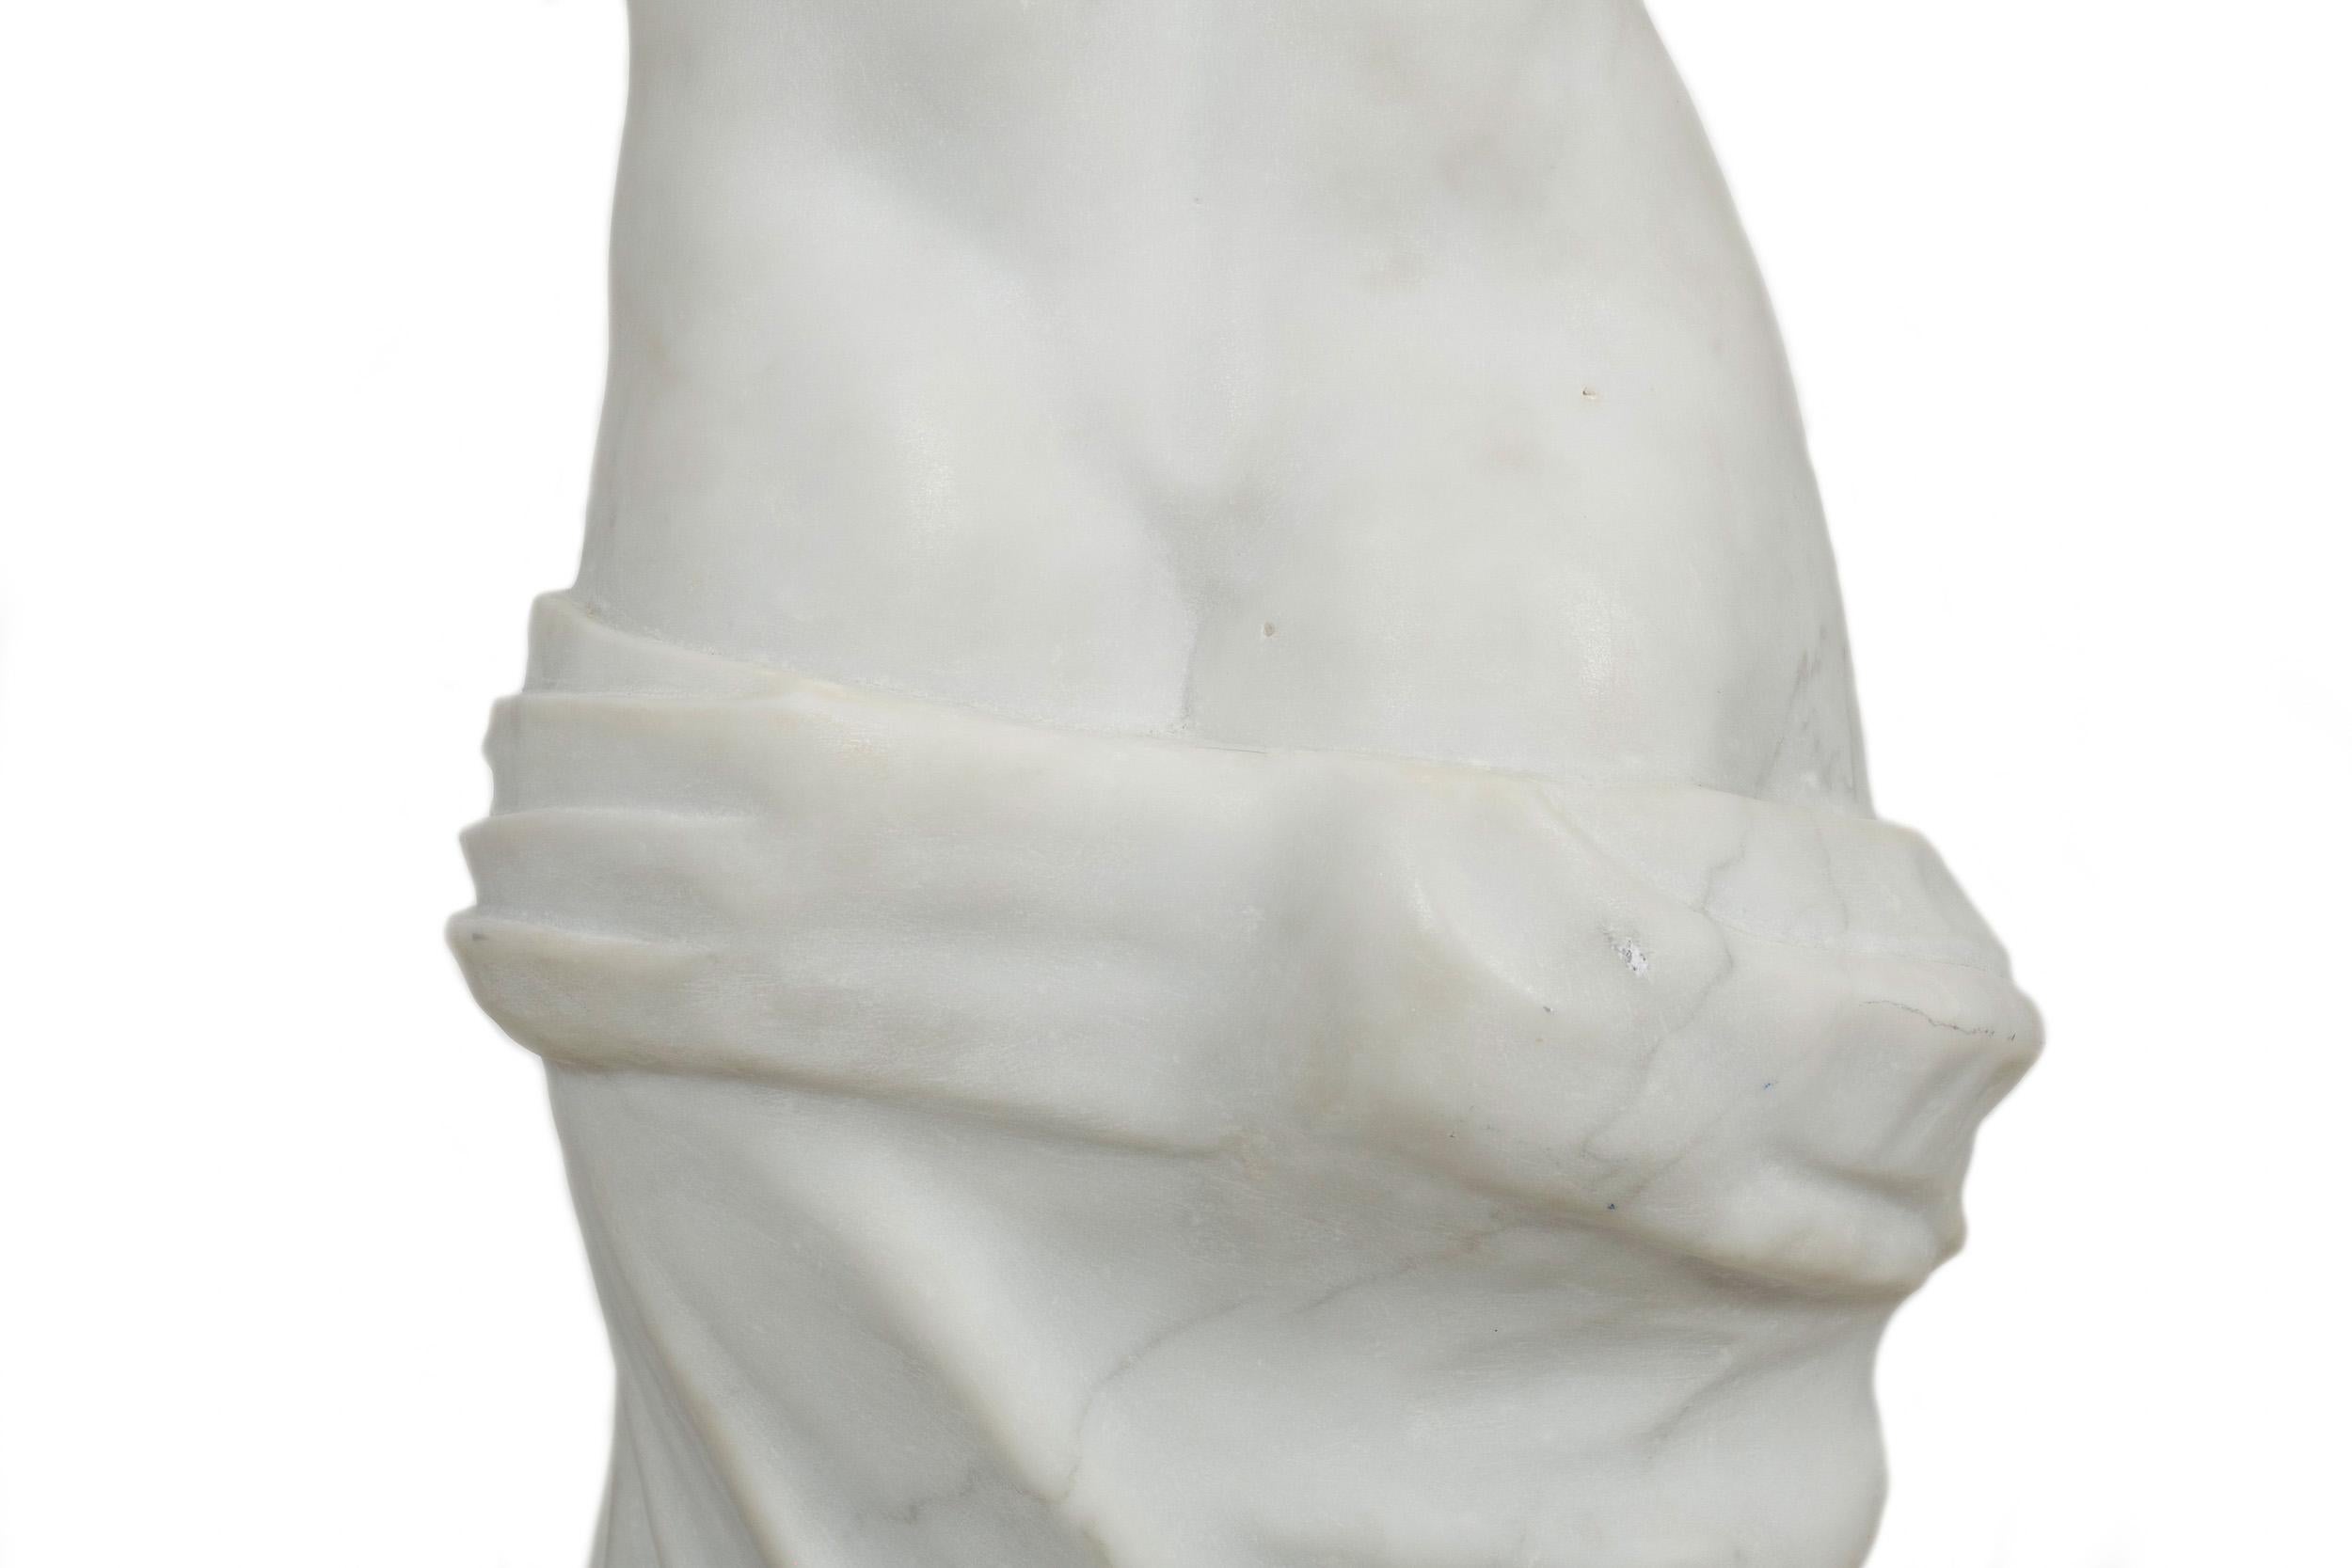 Classical Antique Marble Sculpture of Statue 